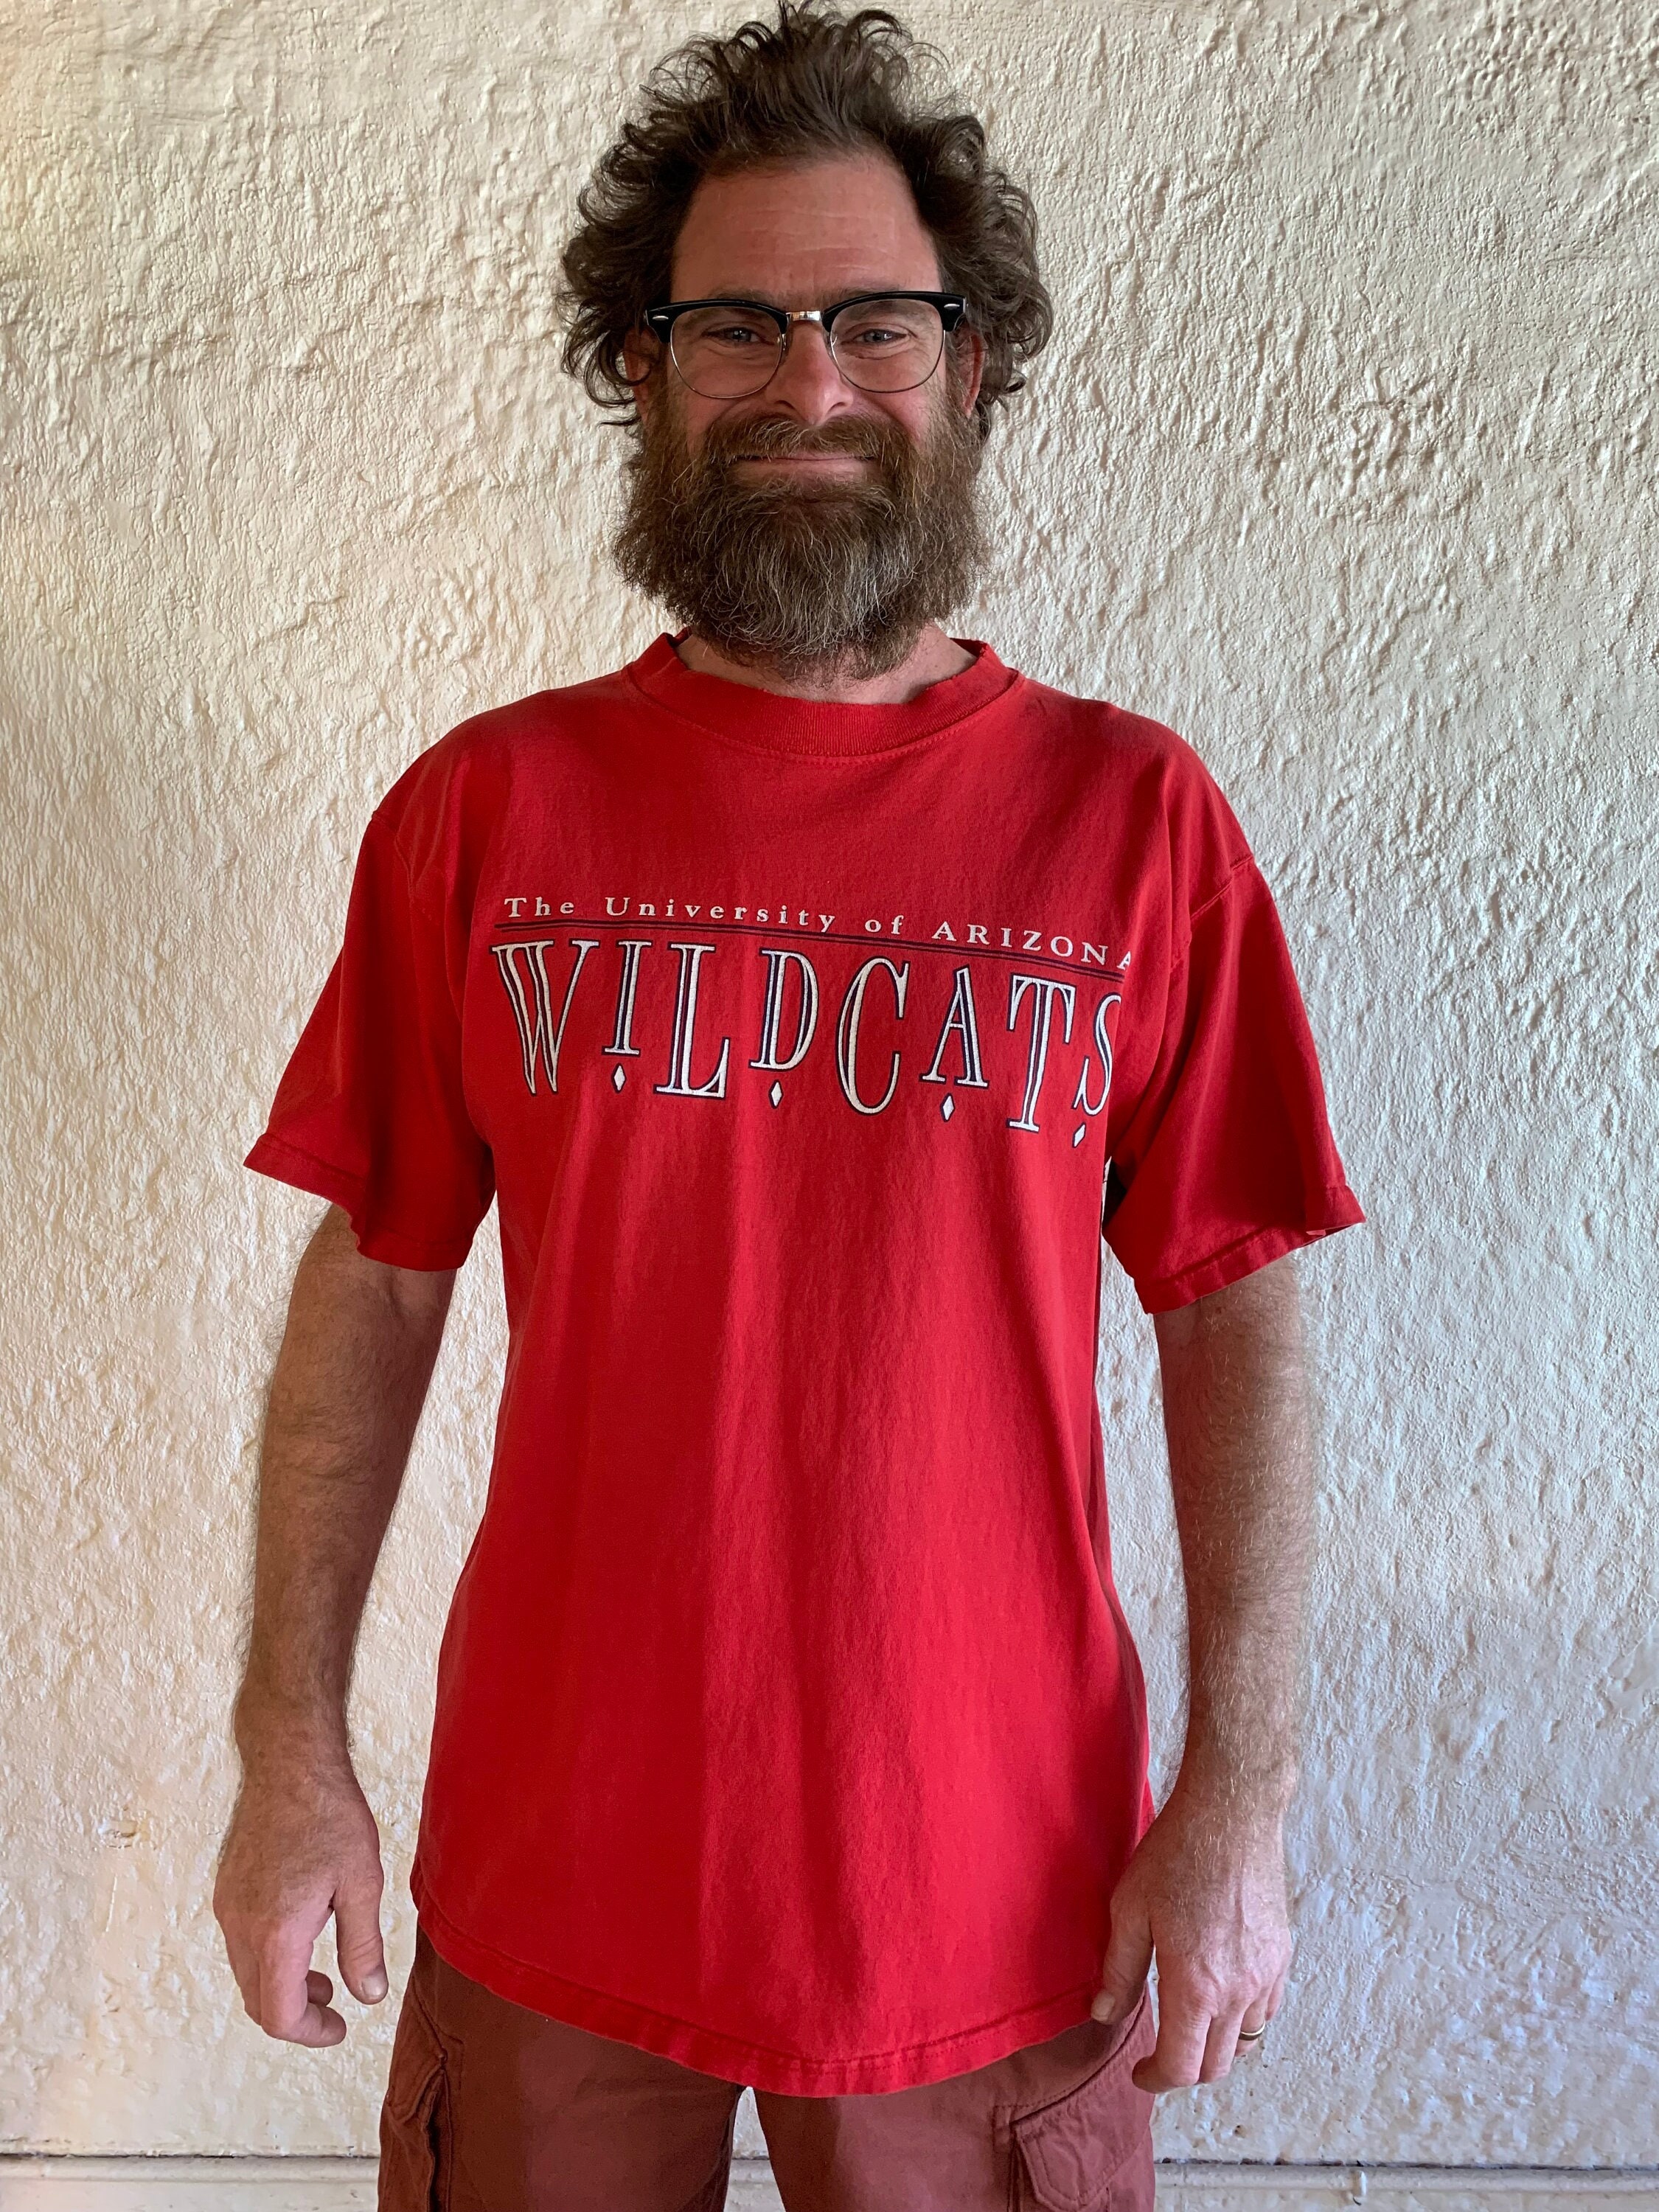 Arizona Wildcats Shirt Vintage - Etsy